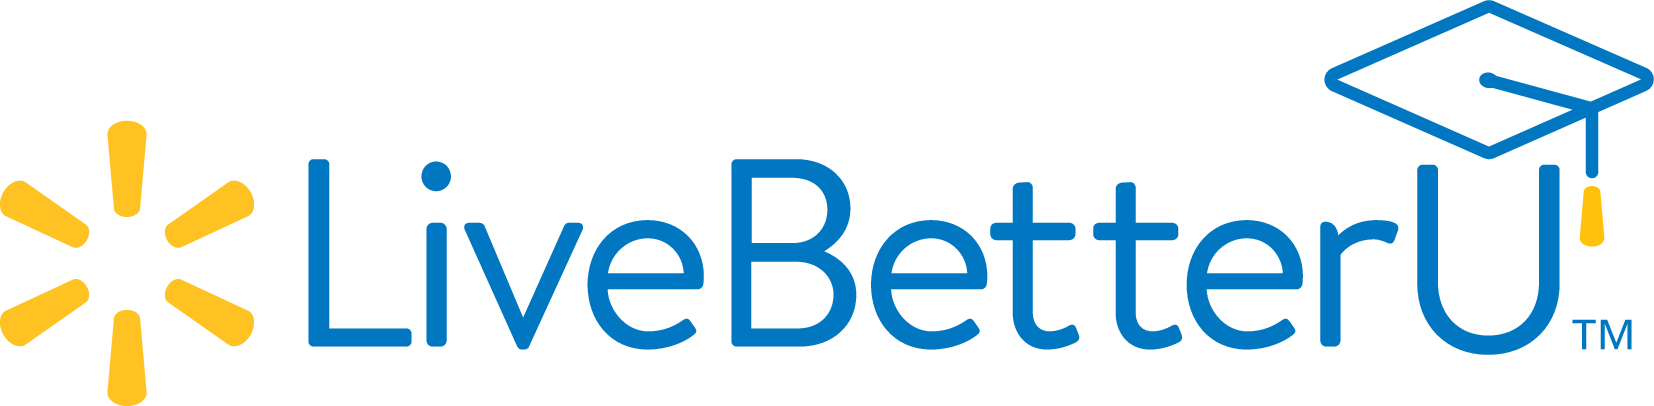 Live Better U logo